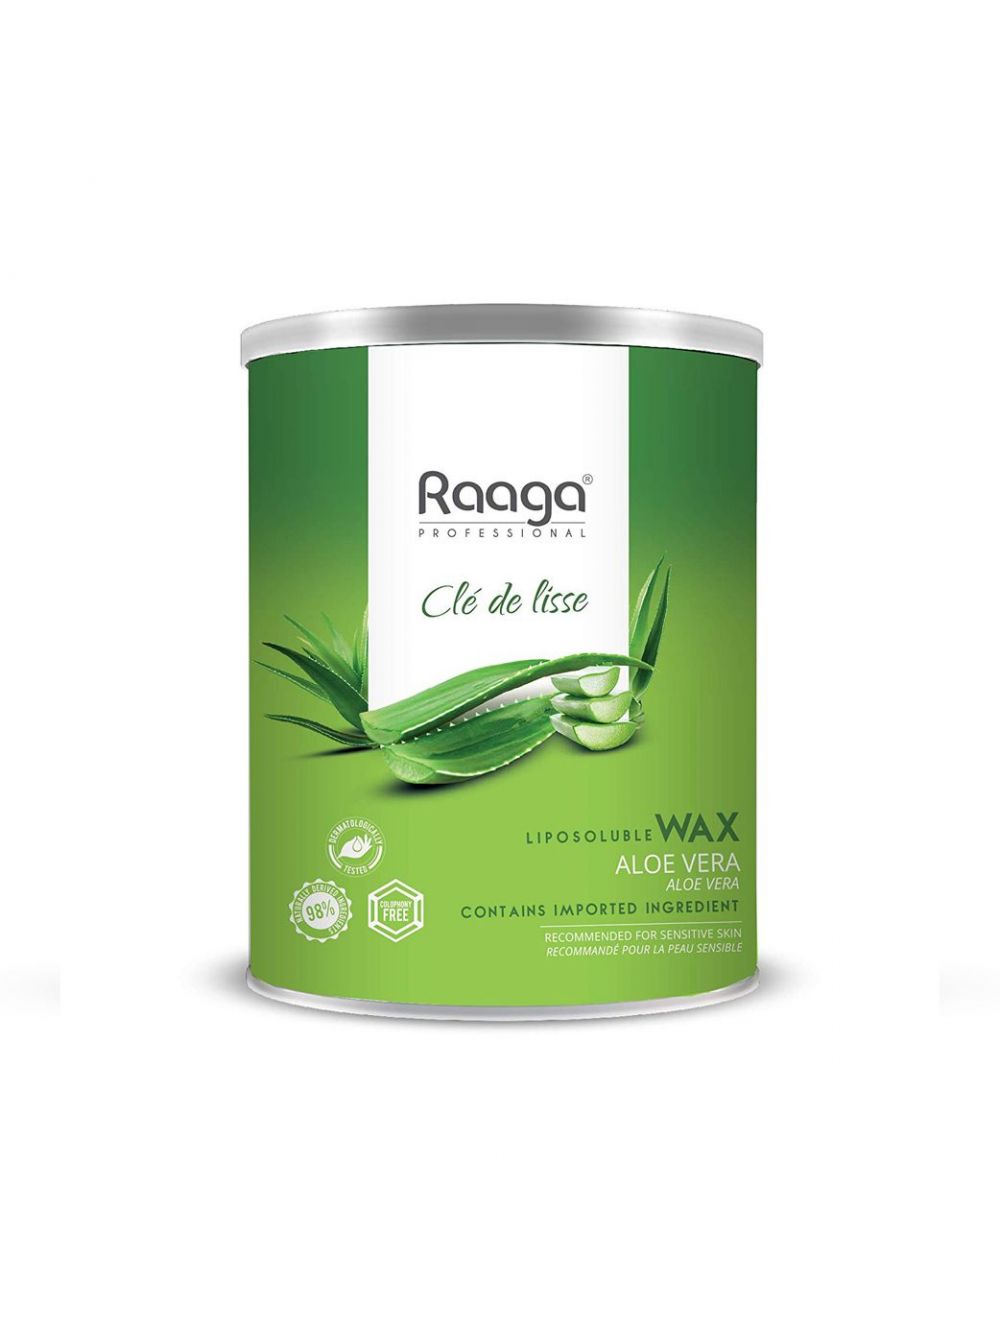 Raaga Professional Aloe Vera Liposoluble Wax (800gm)